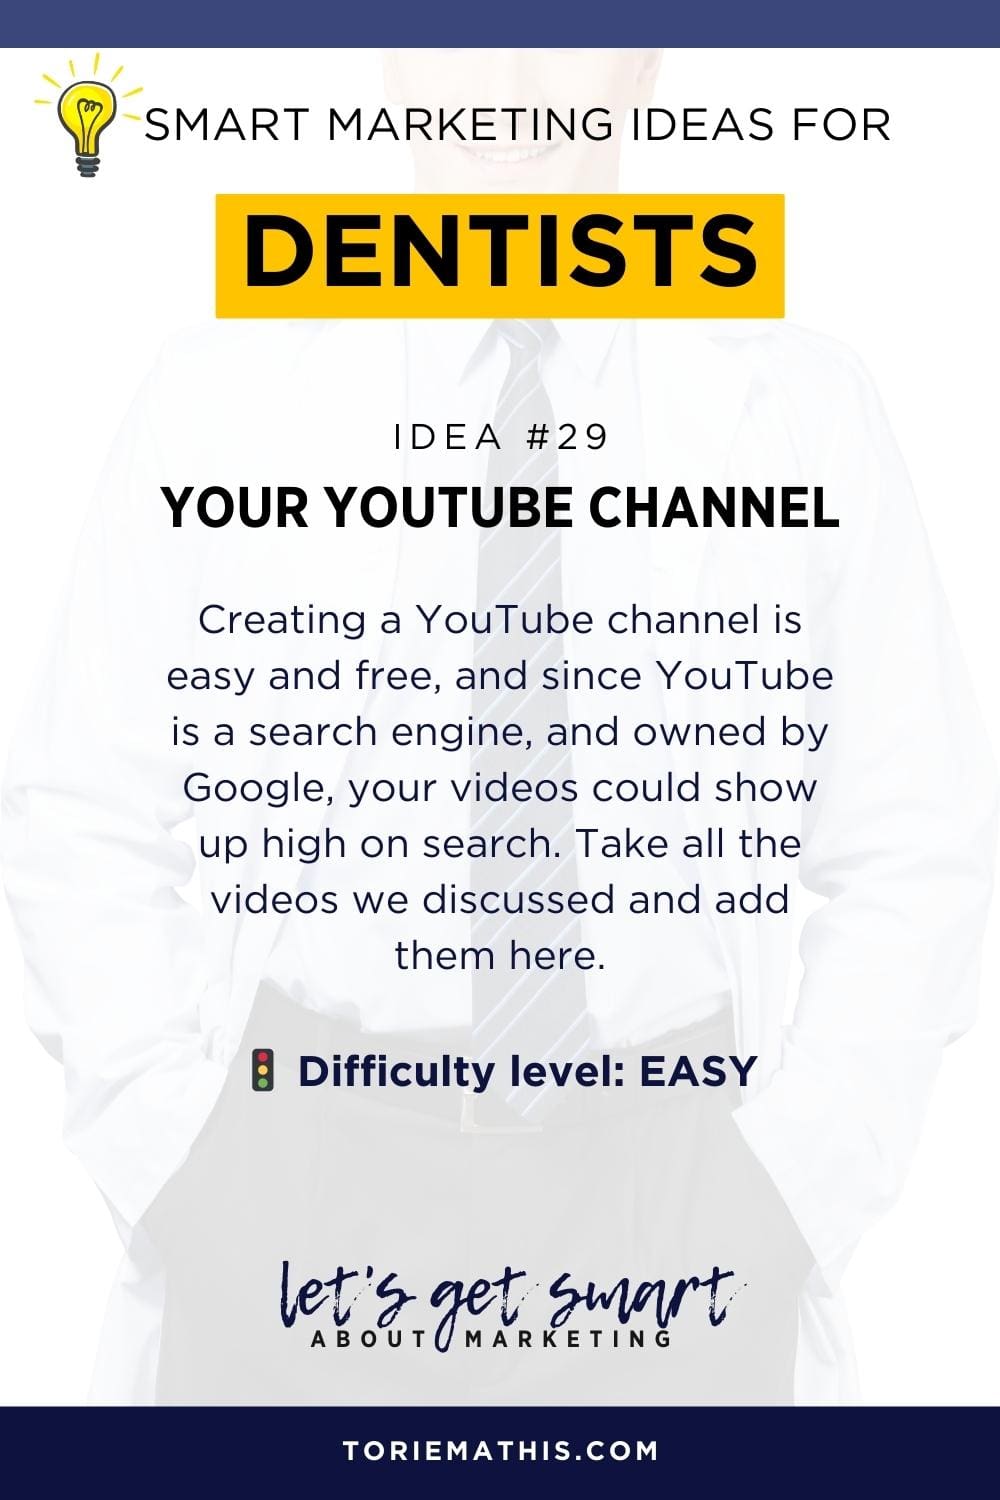 45+ Dental Marketing Ideas